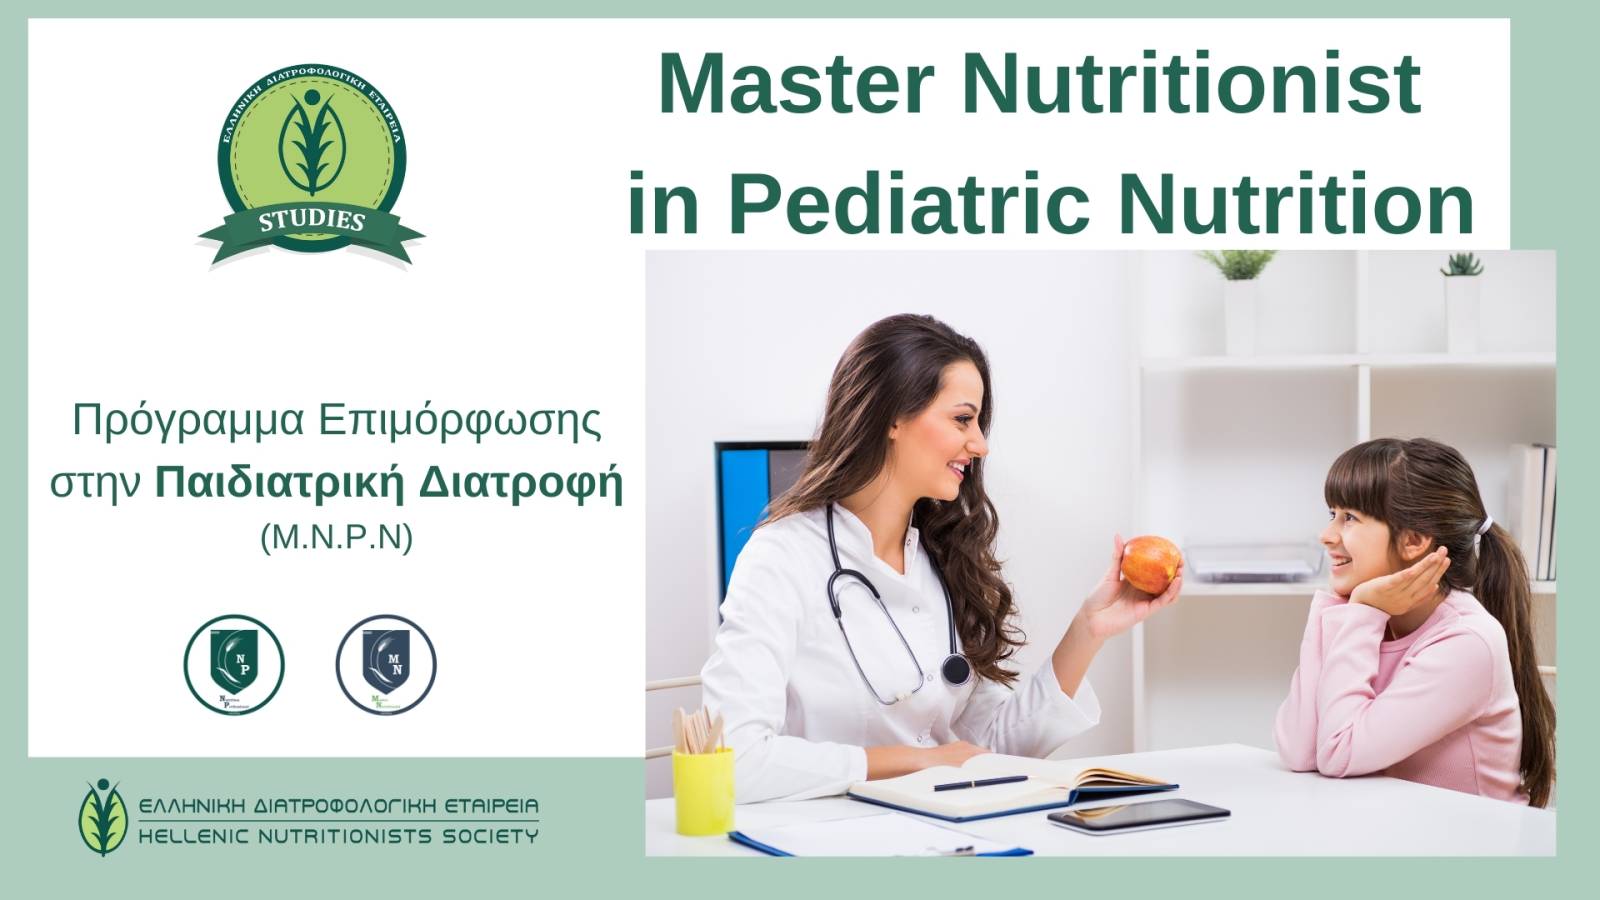 Master Nutritionist in Pediatric Nutrition